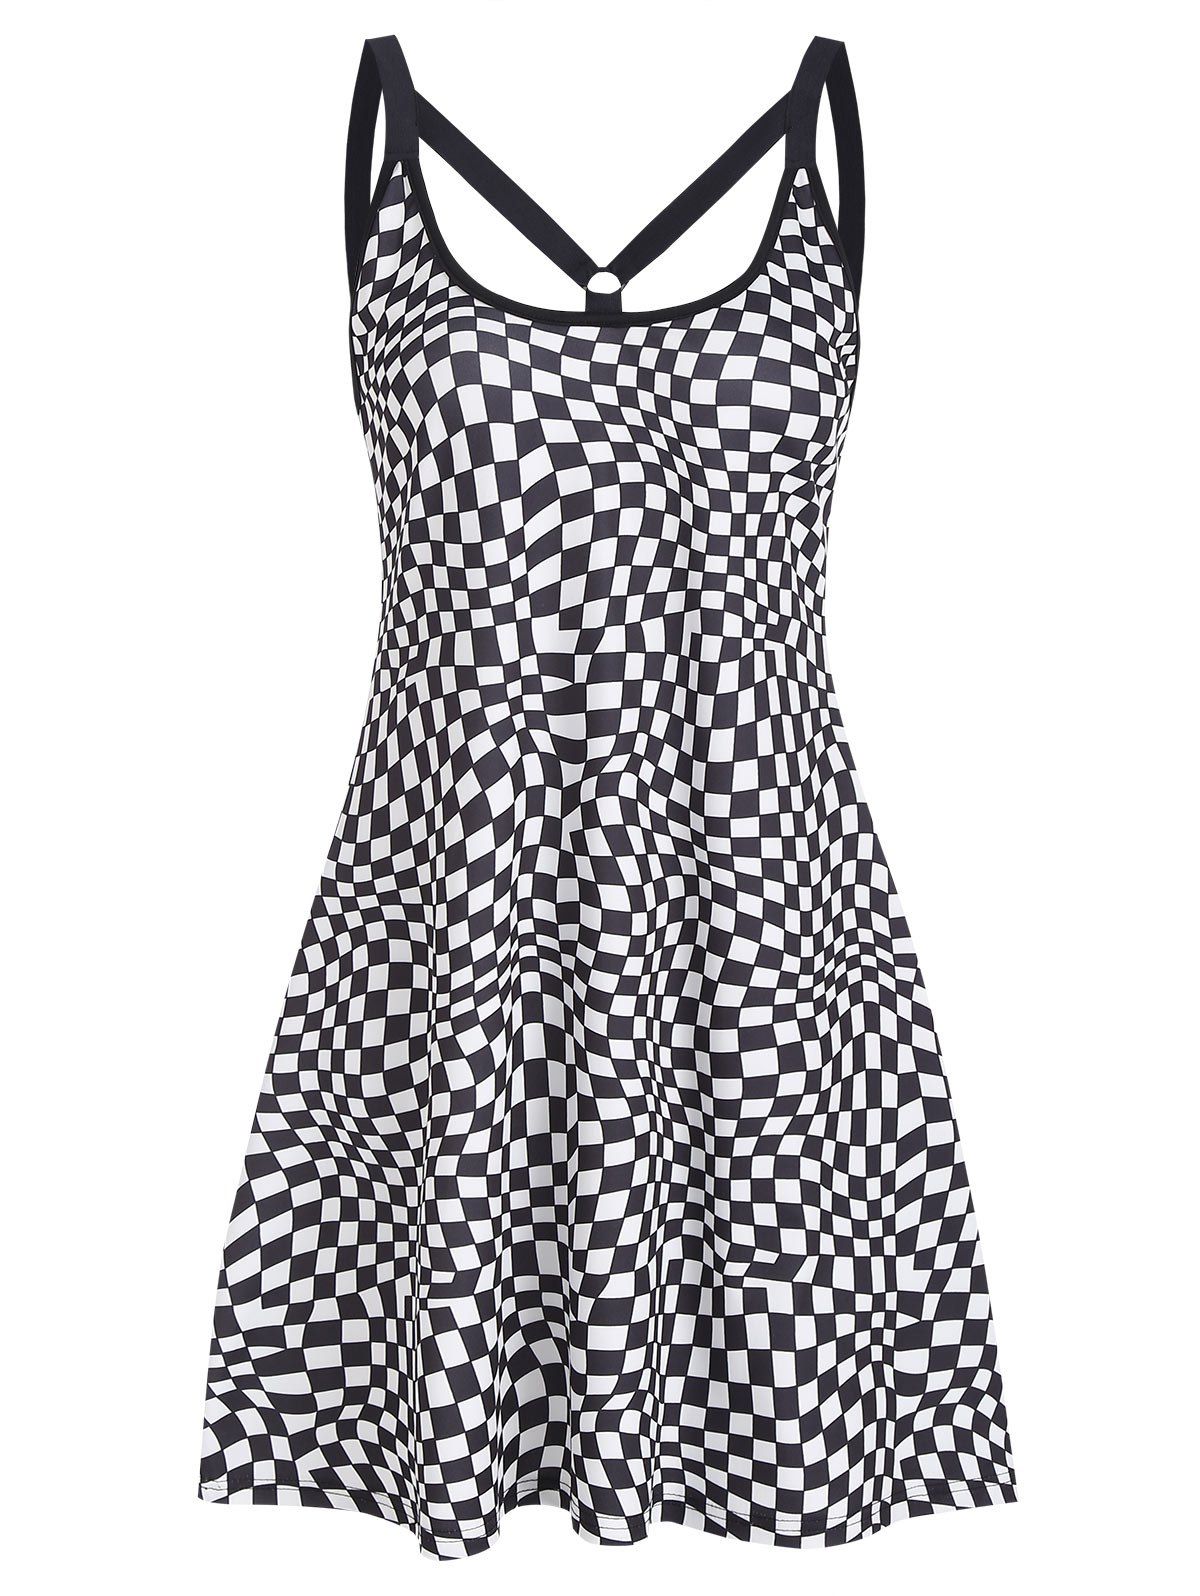 O Ring Strappy Checkerboard Print Tank Dress - BLACK L